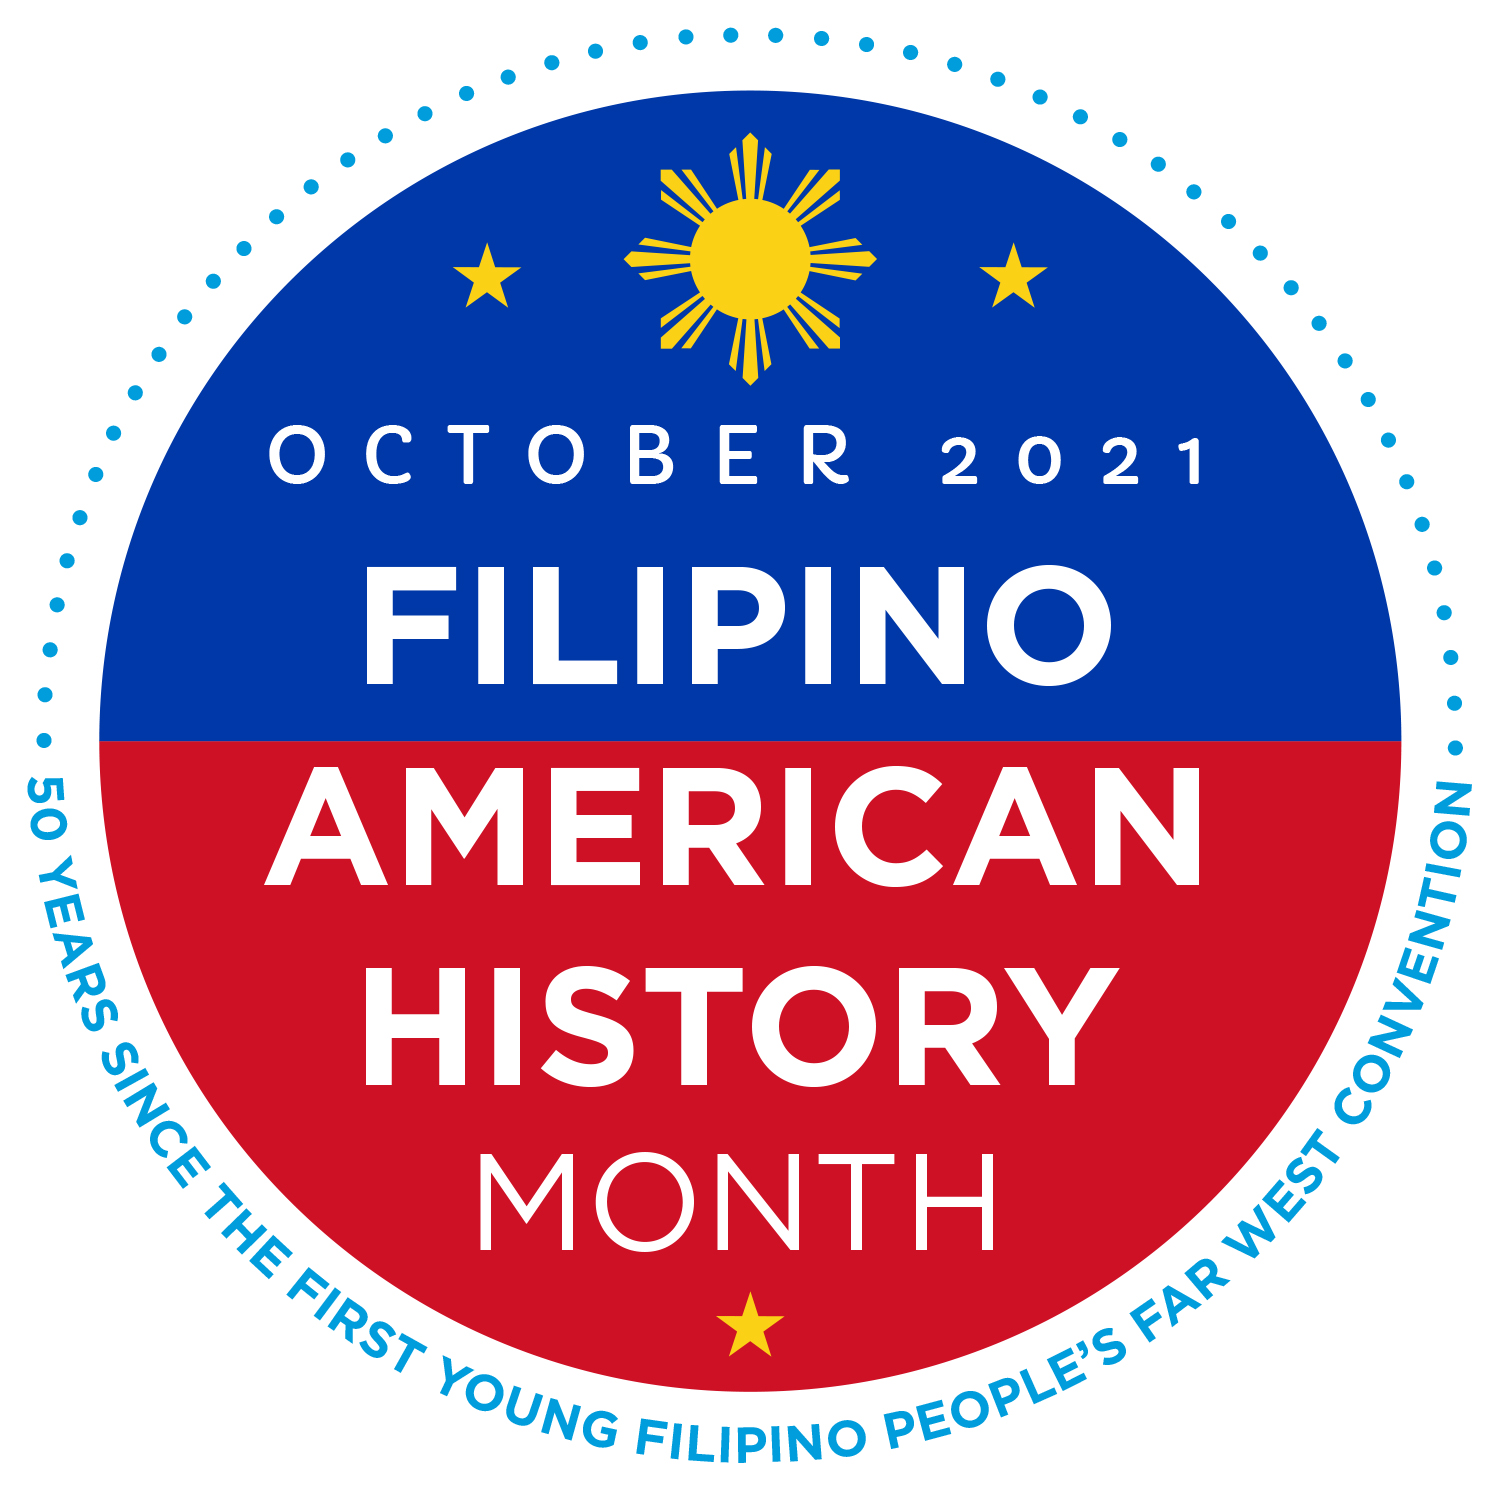 Celebrando el Mes de la Historia Filipino Americana